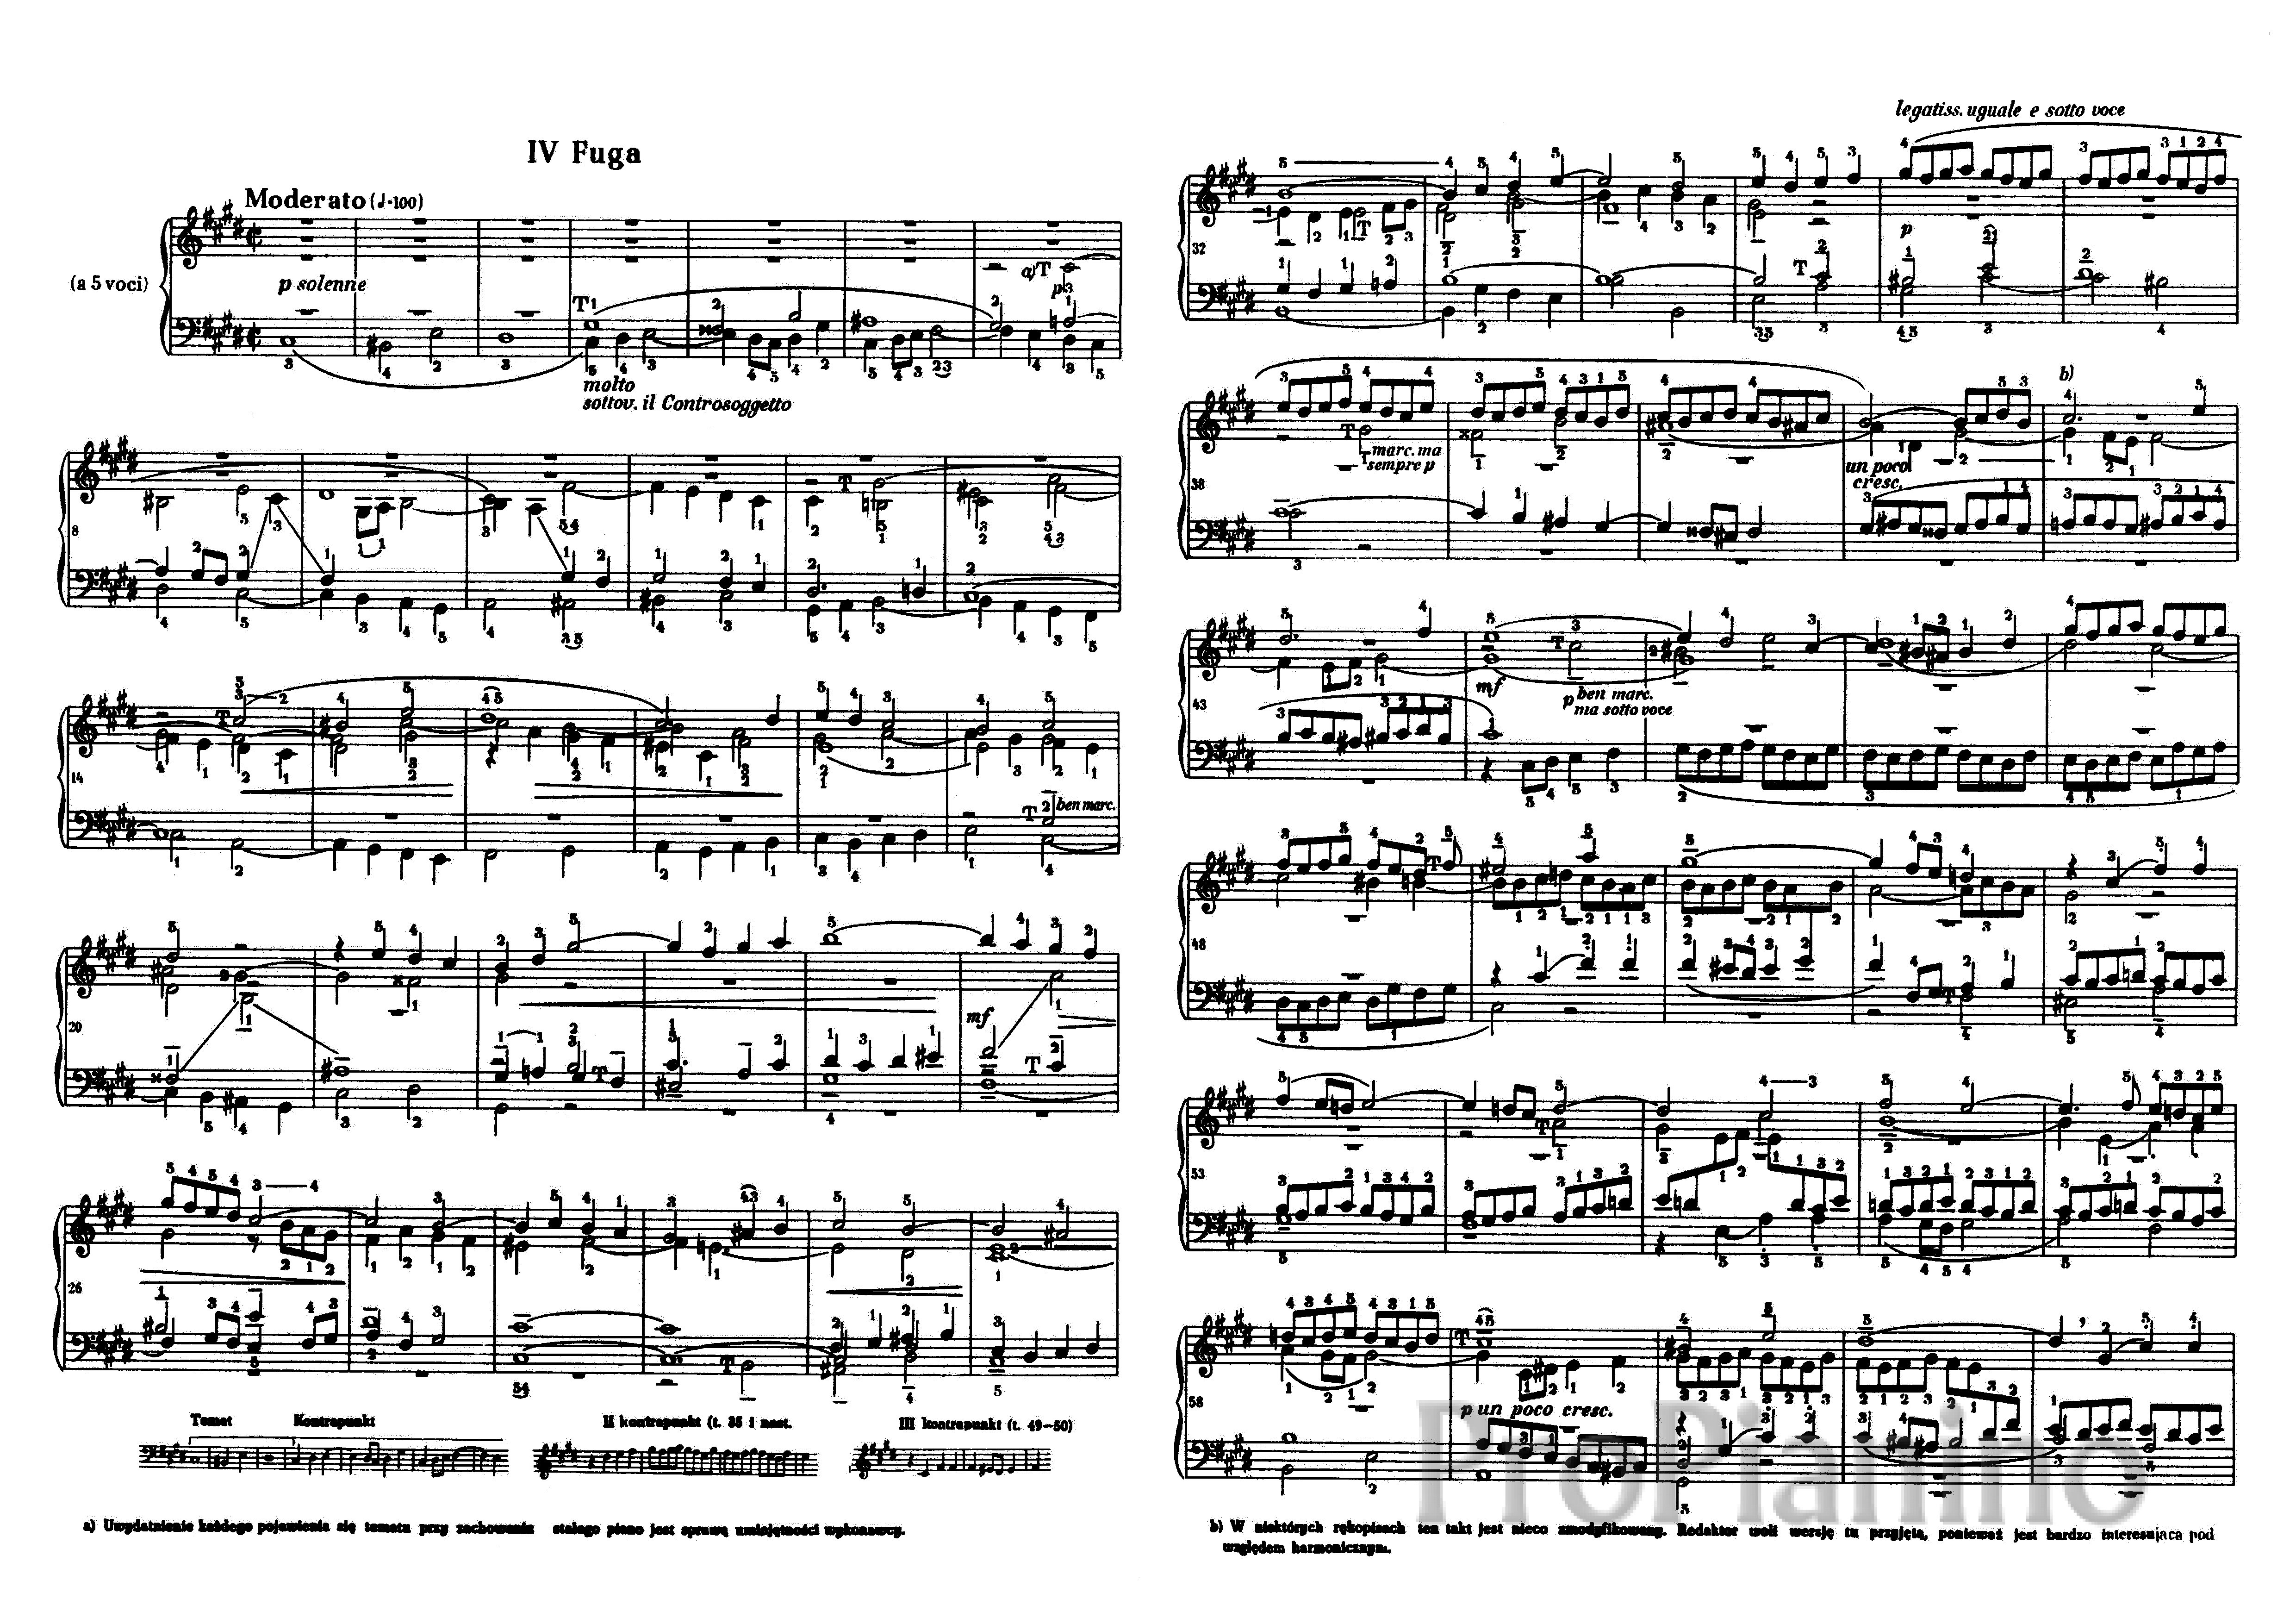 Prelude and fugue in c minor, bwv 847 (bach, johann sebastian) - imslp: free sheet music pdf download